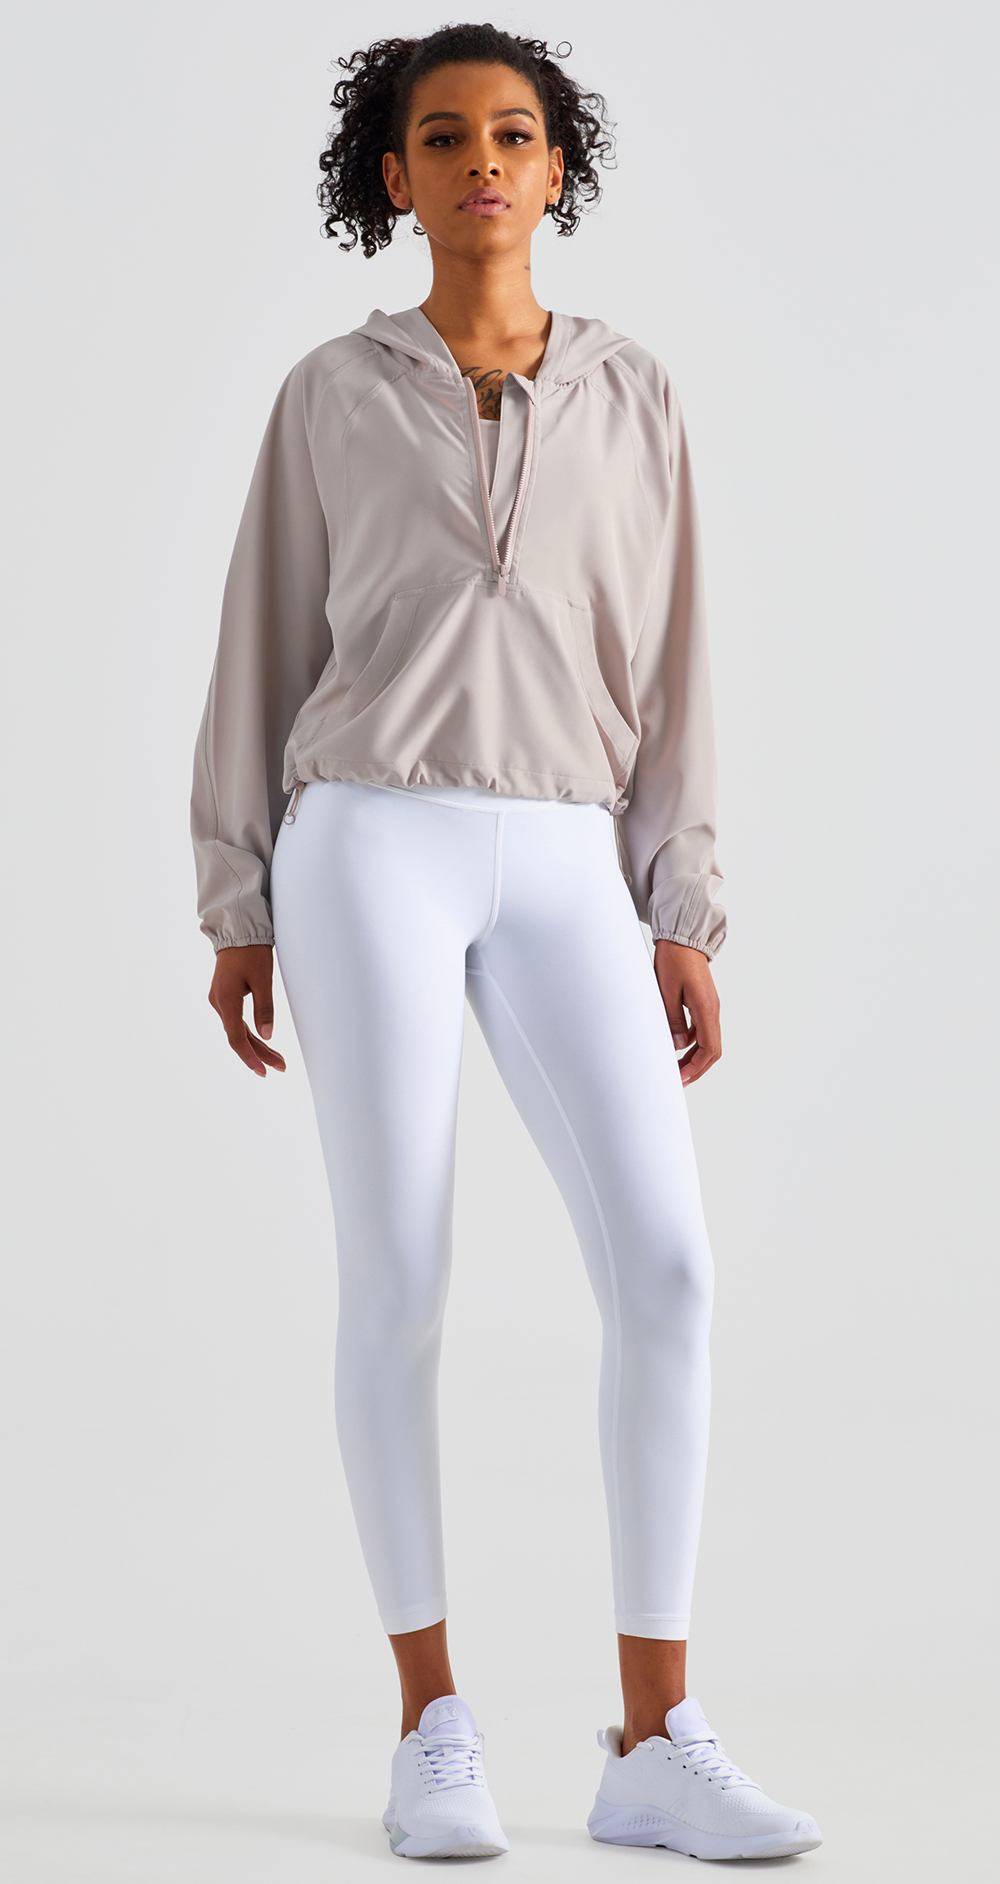 Hergymclothing affordable cropped zip up workout jacket and white yoga leggings